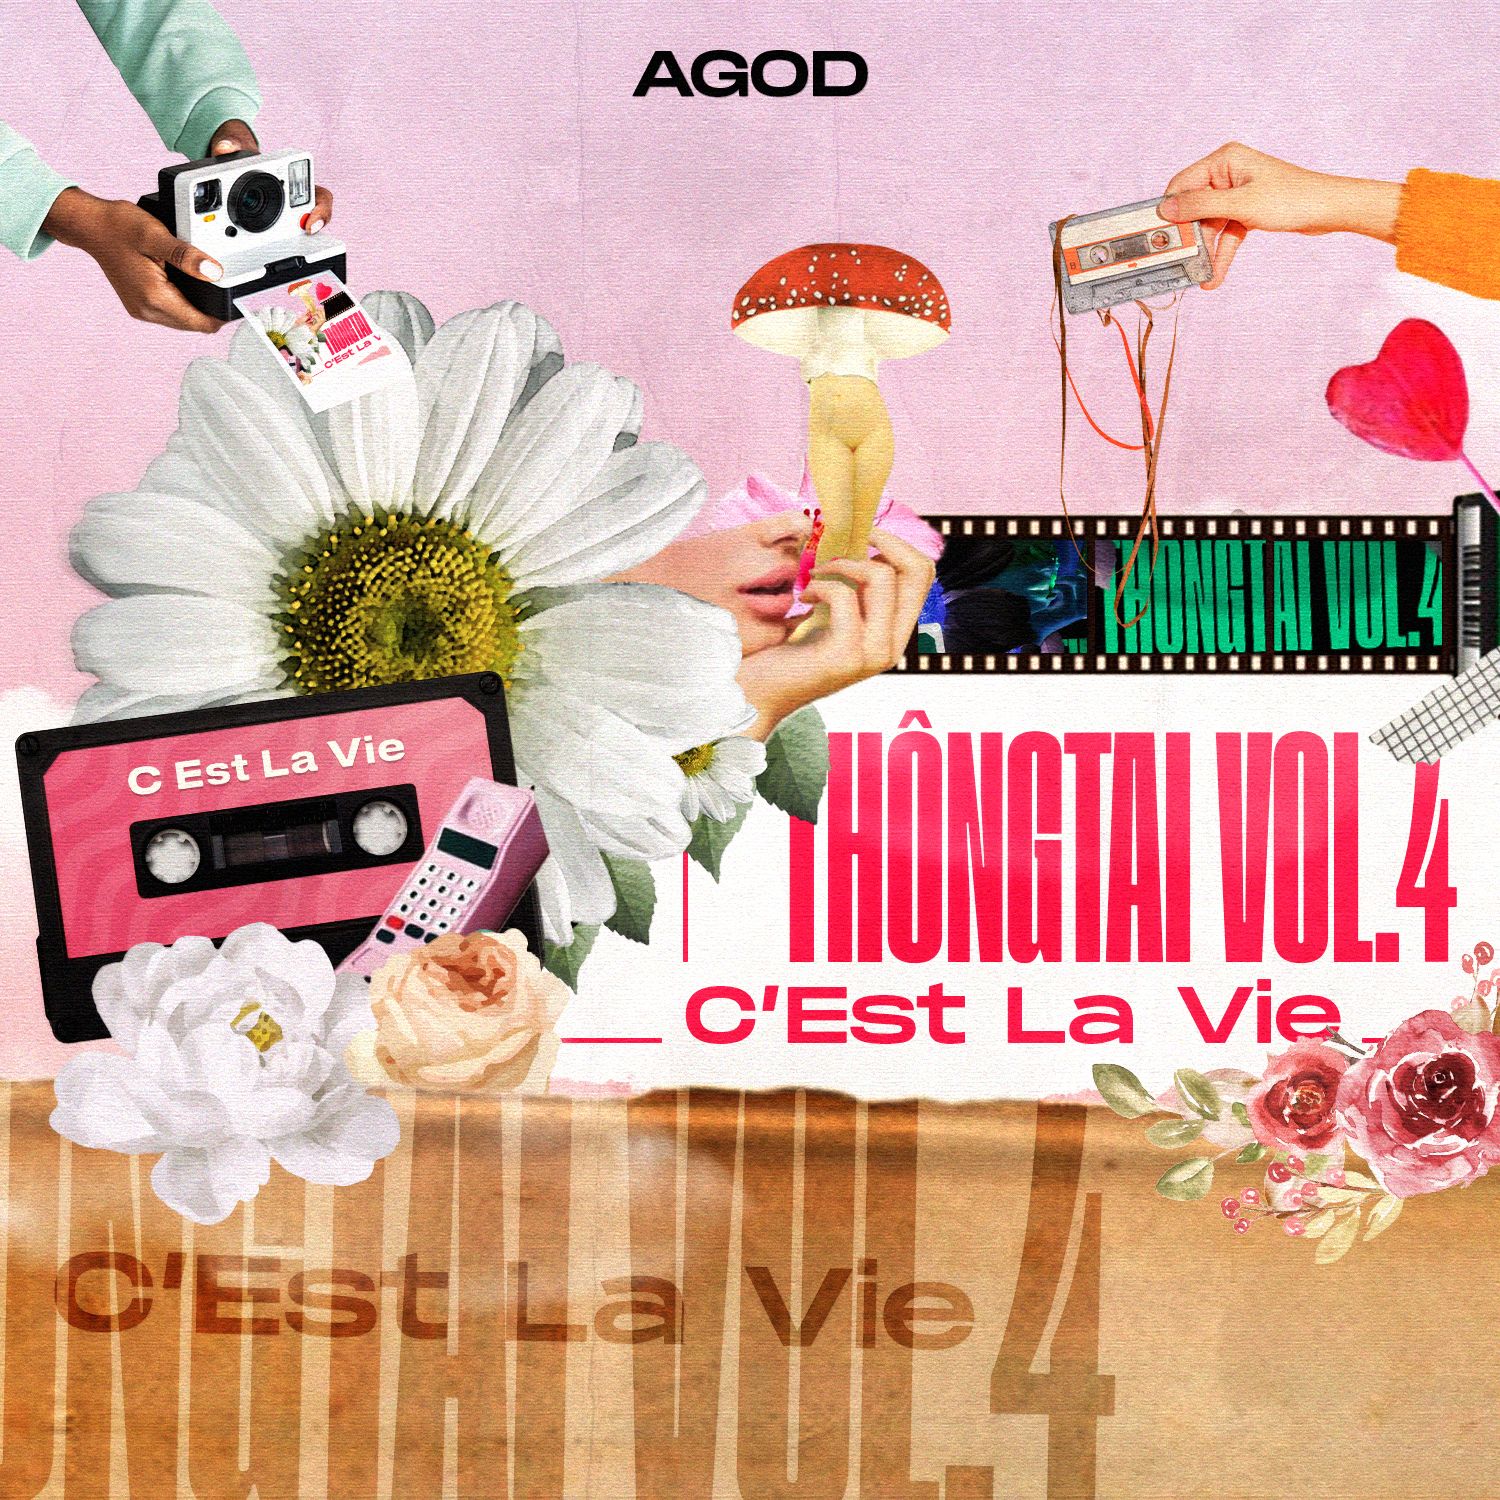 डाउनलोड करा THÔNGTAI Vol.4 - C'est La Vie